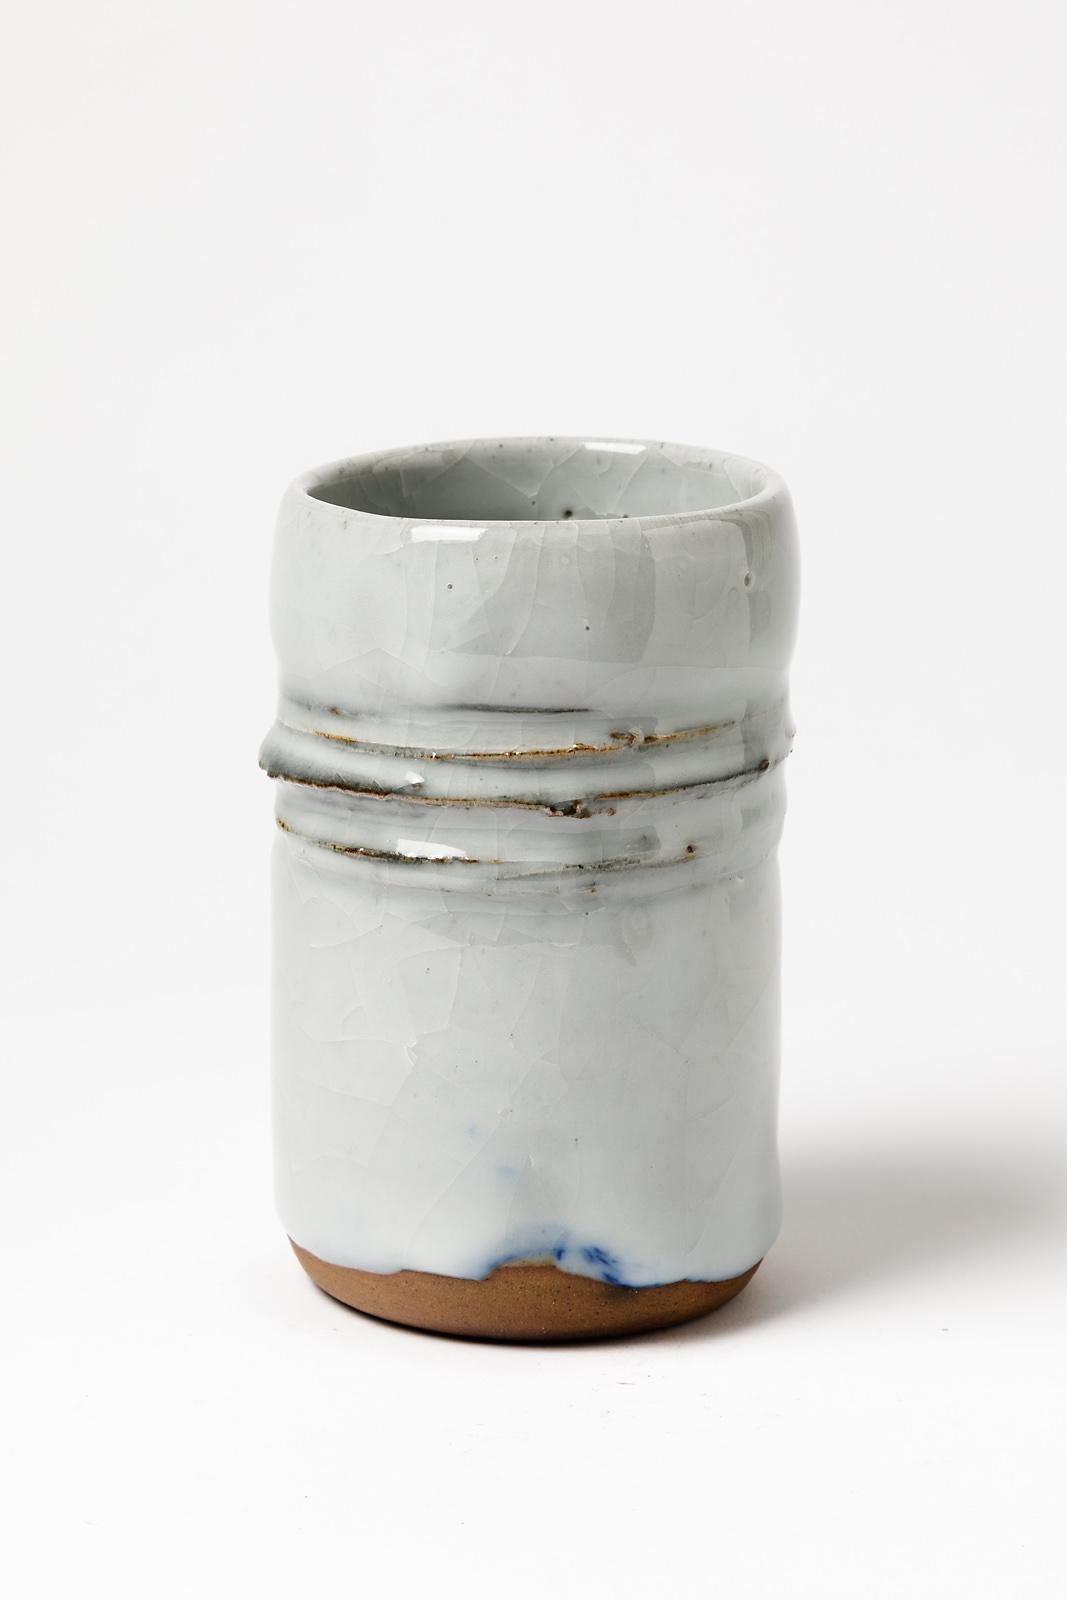 Unique ceramic vase

XXth century design 

Signed under the base

White and blue ceramic glazes colors

Original perfect condition

Measures: H 16 cm L 10 cm.